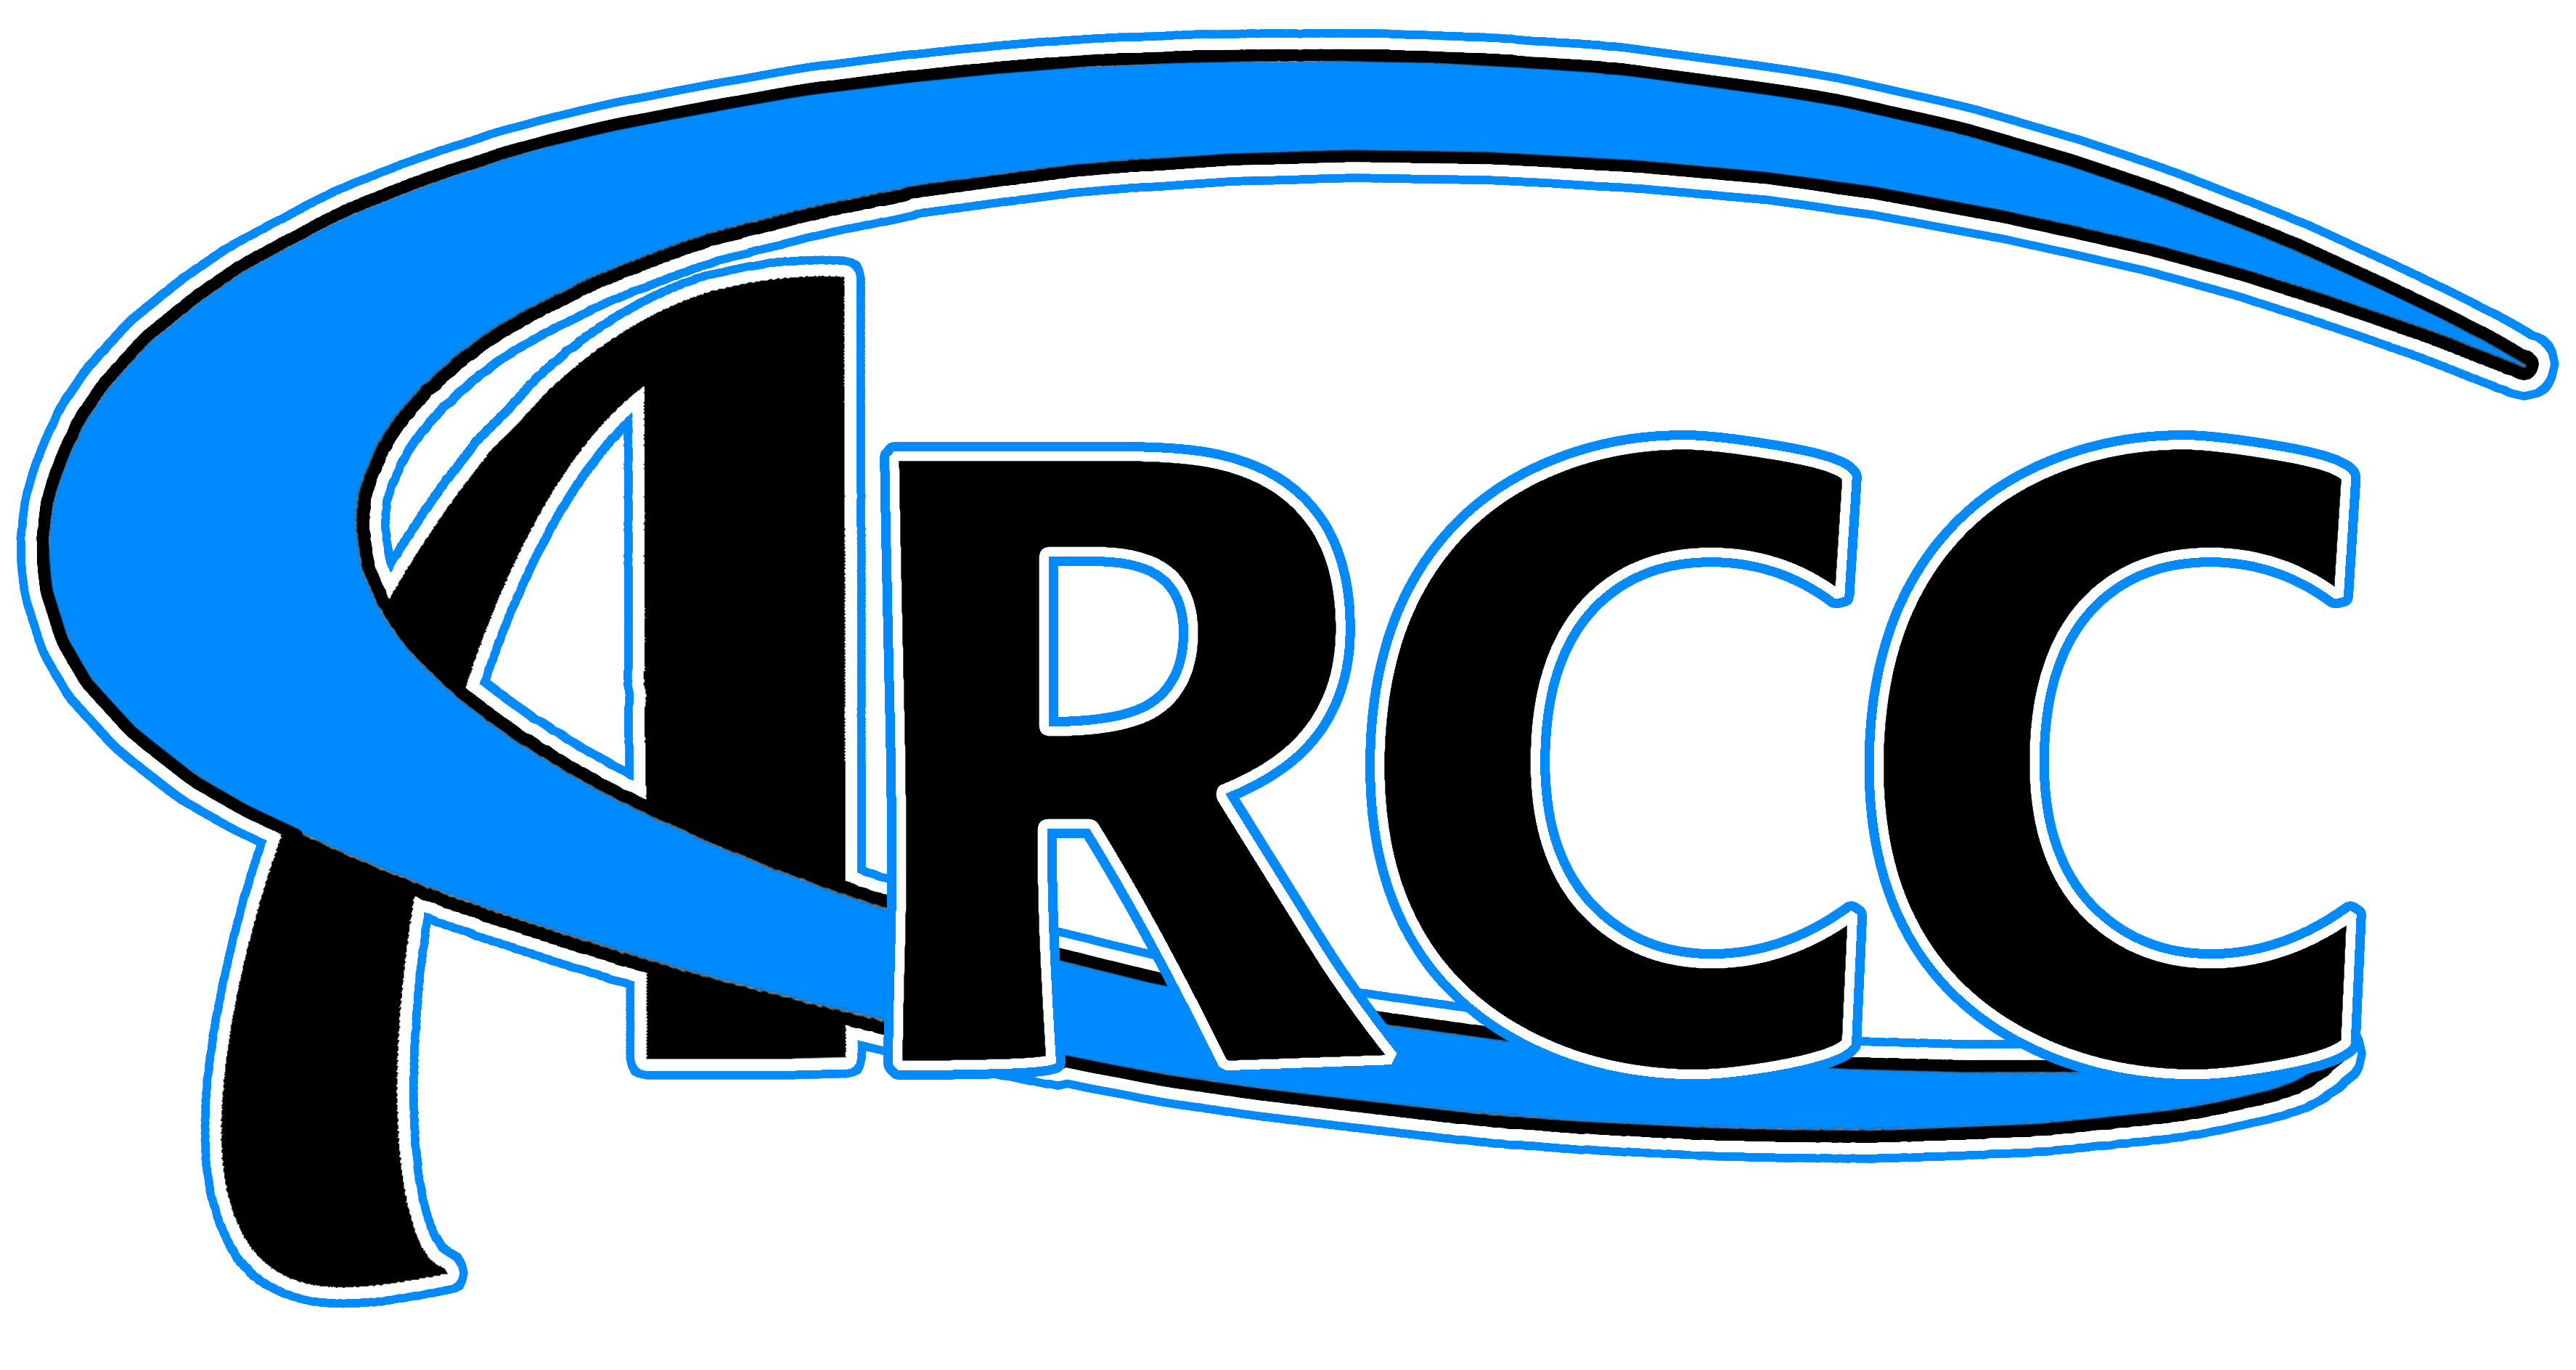 ARCC Logo